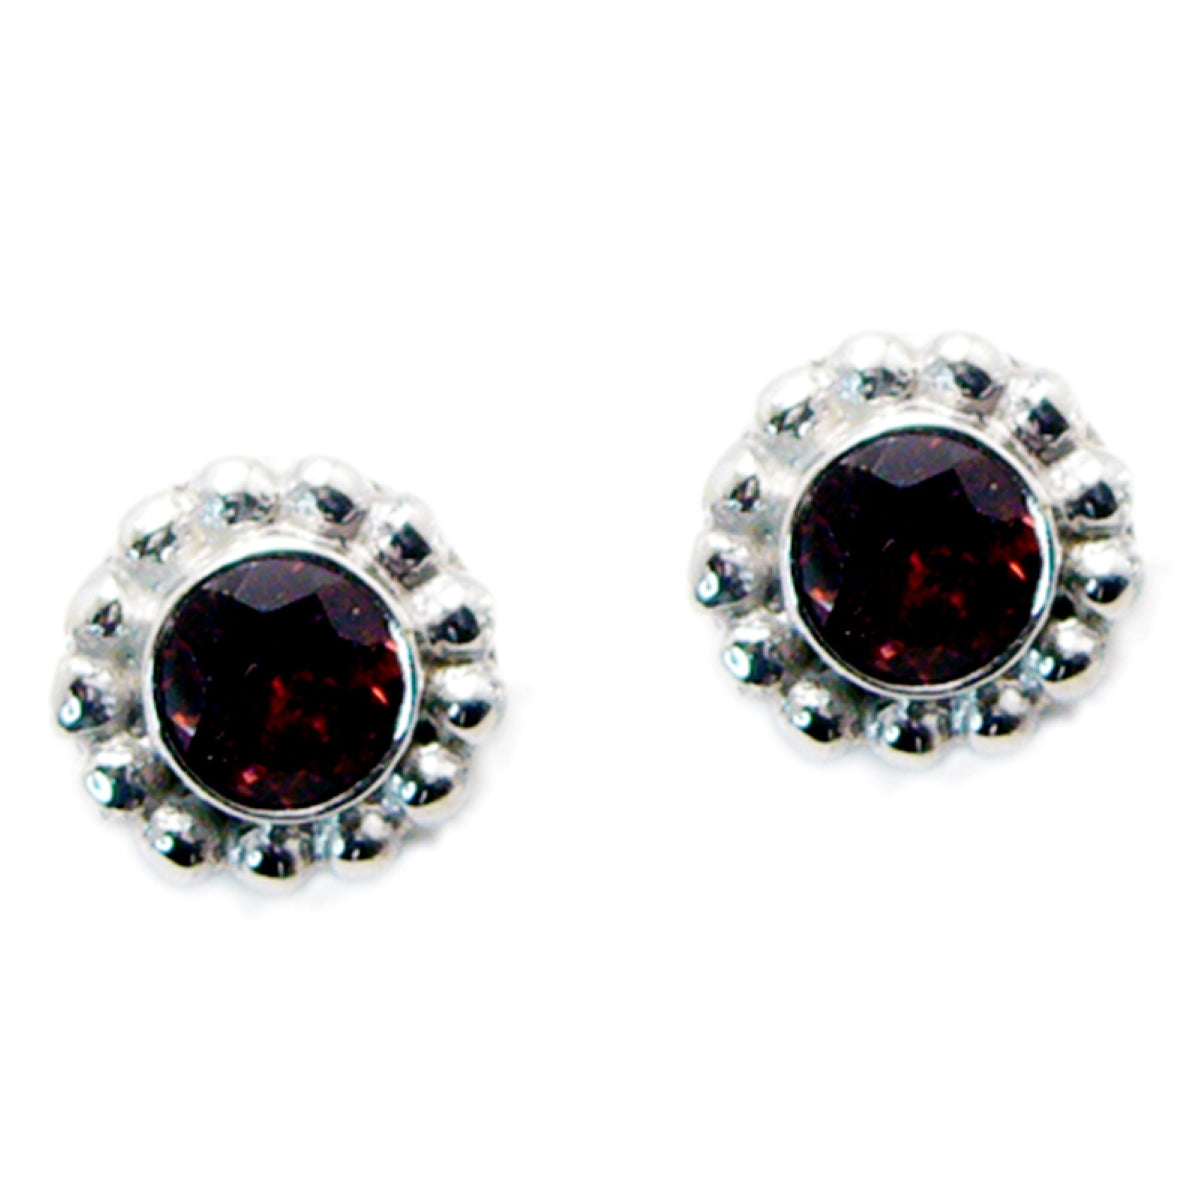 Riyo Nice Gemstone round Faceted Red Garnet Silver Earrings gift for children day